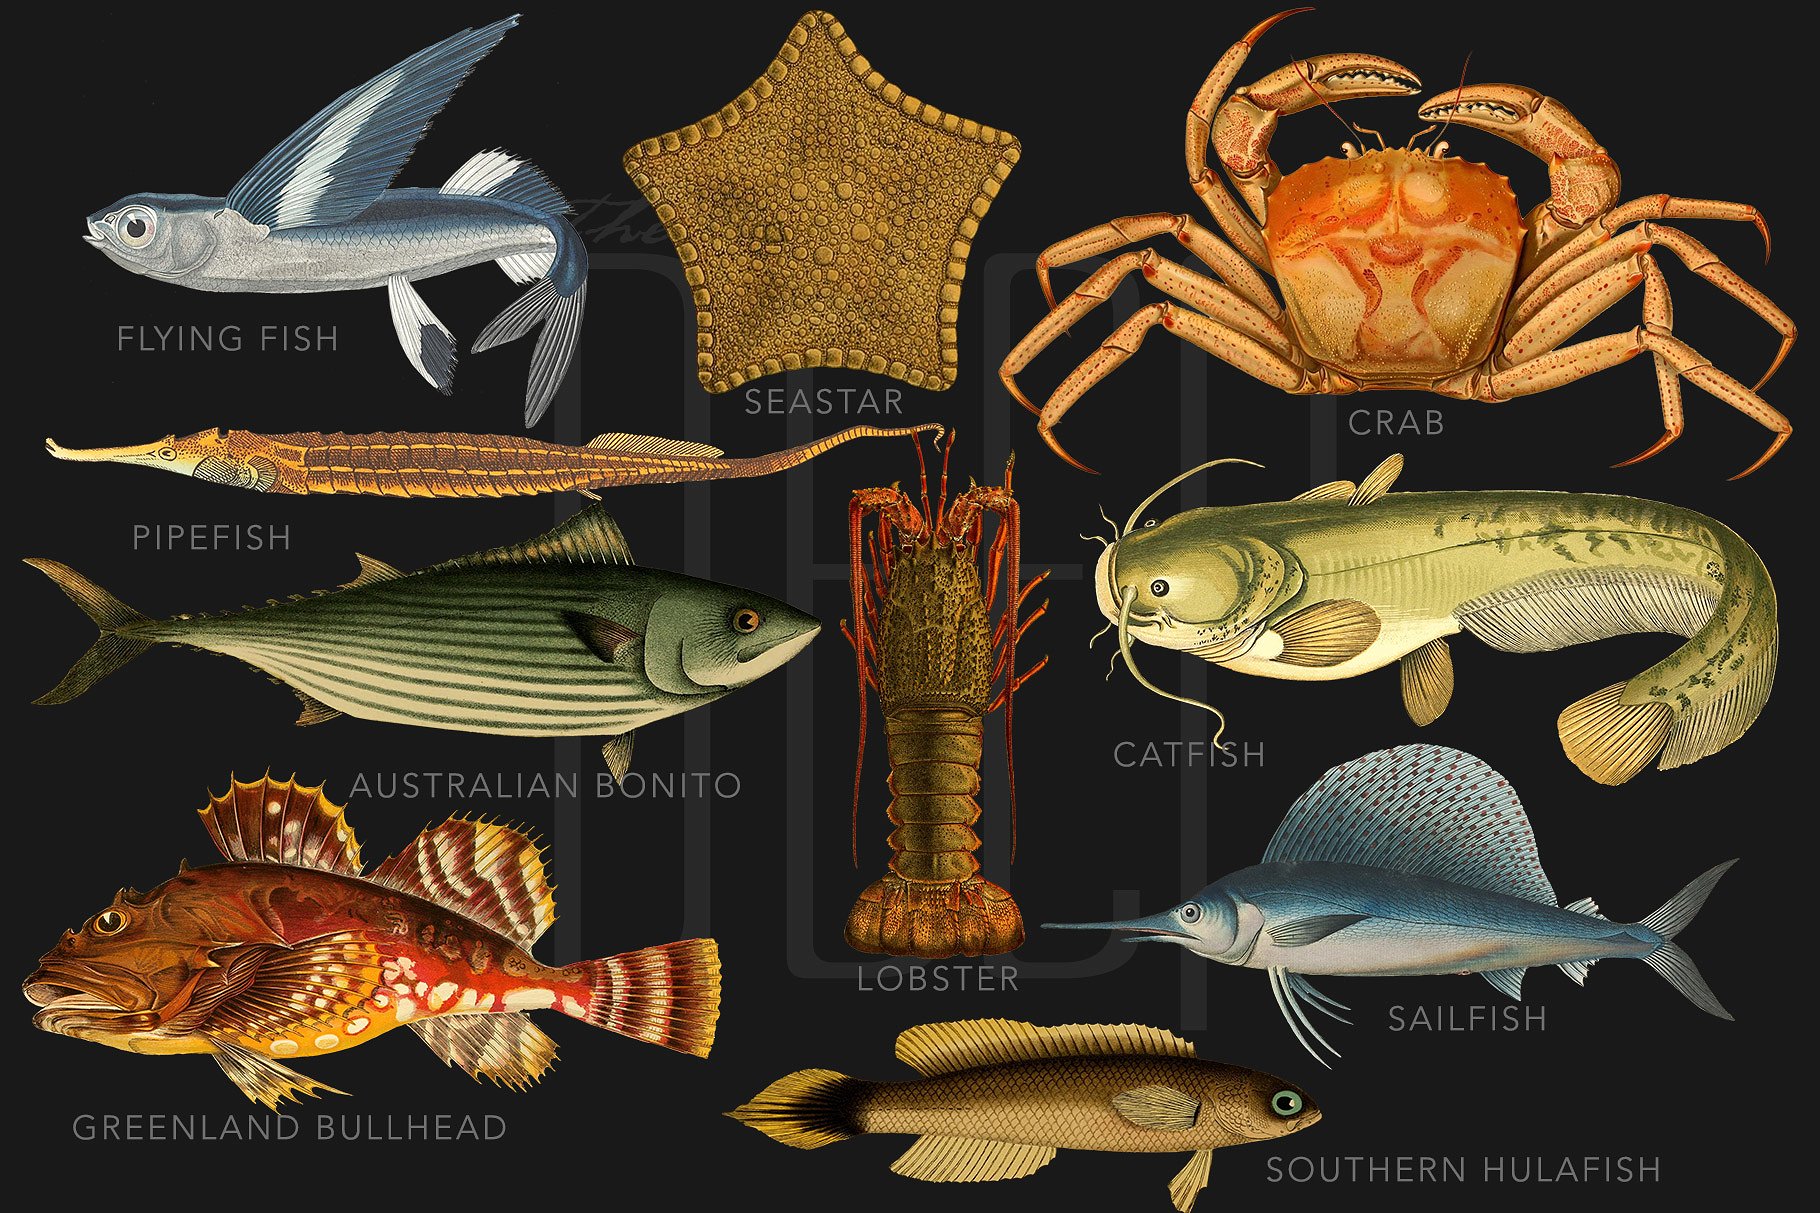 40年代复古深海类海洋生物科学插图 The Deep Sea Creature Illustrations插图(2)